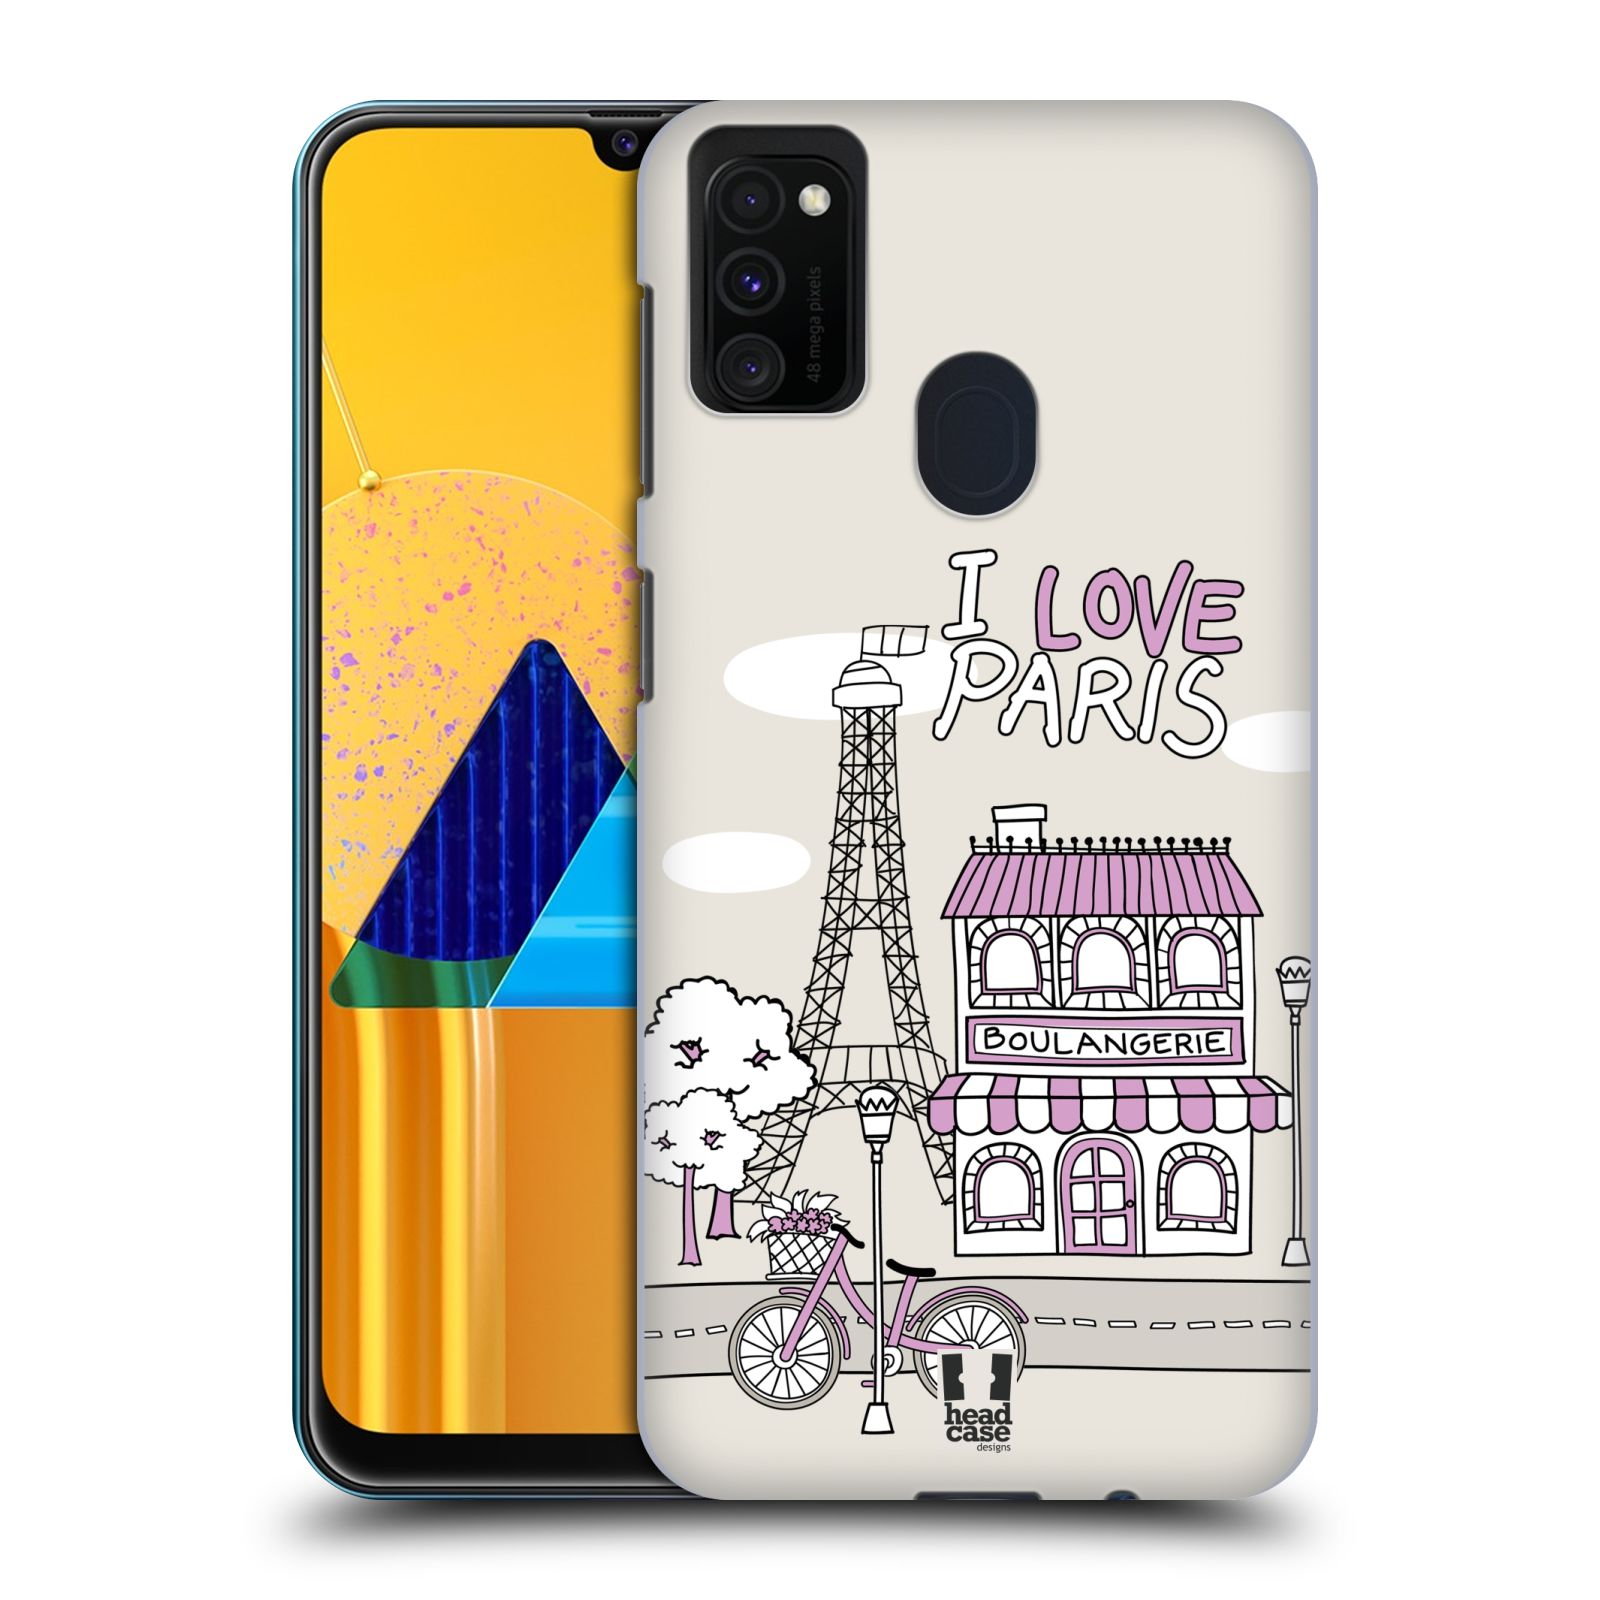 Plastový obal HEAD CASE na mobil Samsung Galaxy M30s vzor Kreslená městečka FIALOVÁ, Paříž, Francie, I LOVE PARIS